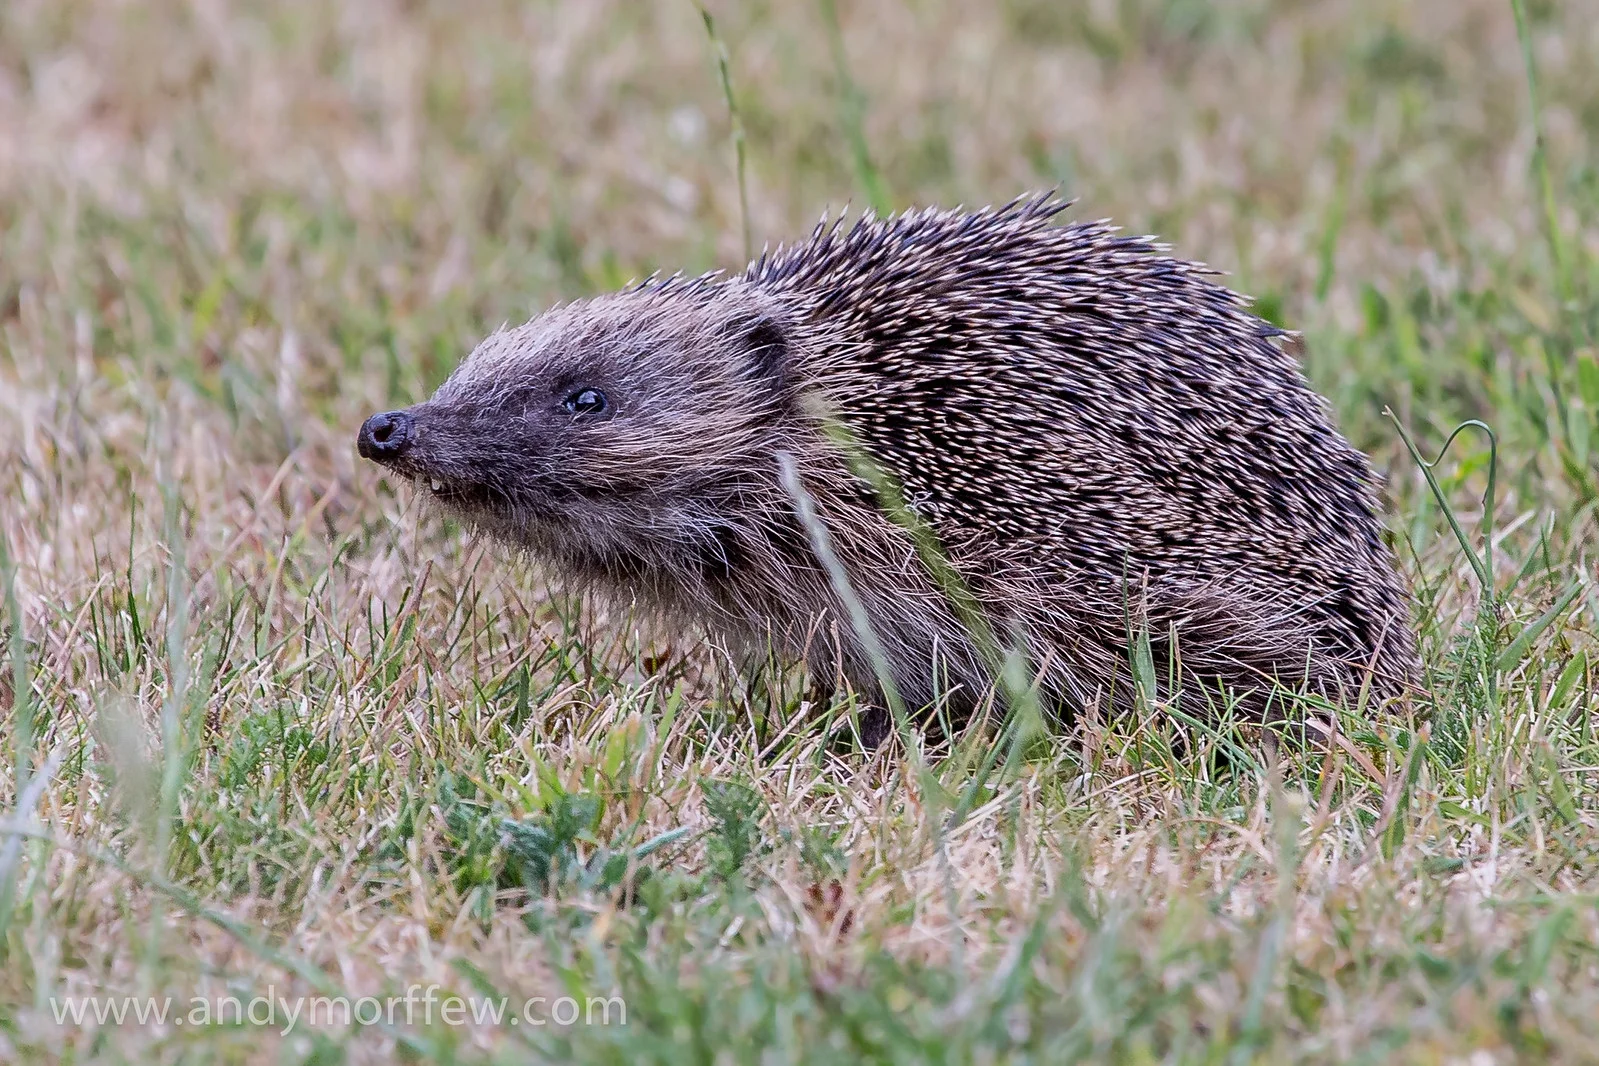 Groundhog Vs Hedgehog